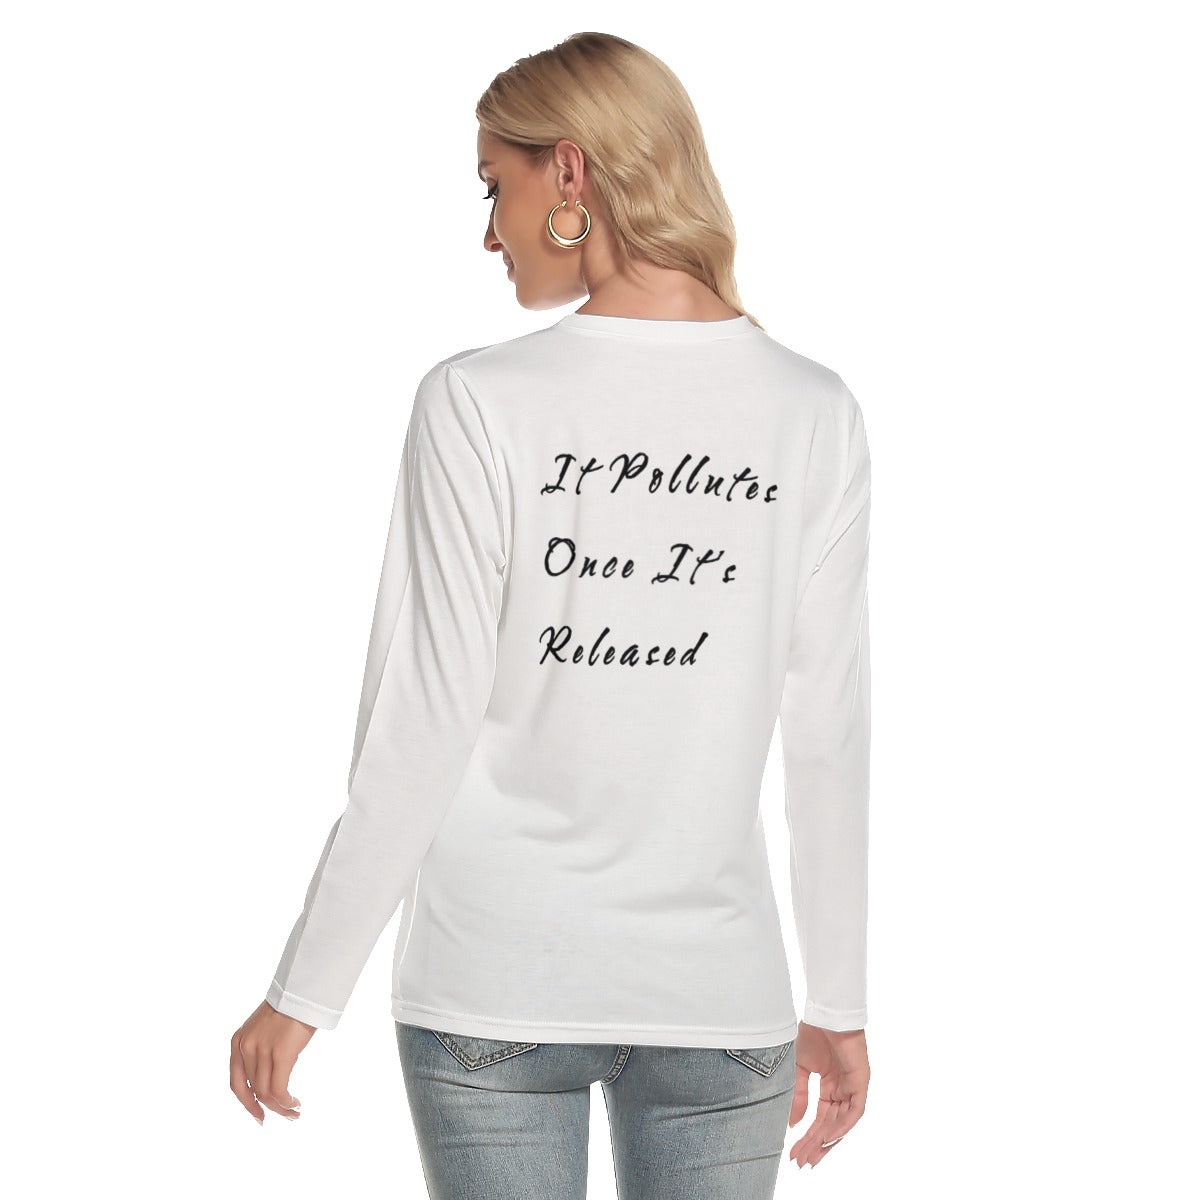 All-Over Print Women's O-neck Long Sleeve T-shirt